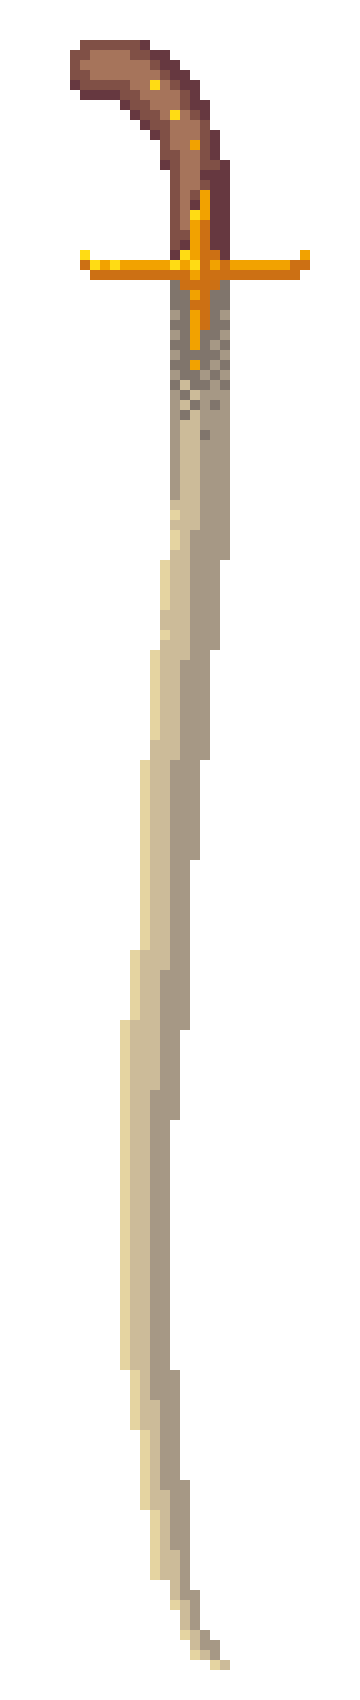 pixel art of an antique scimitar